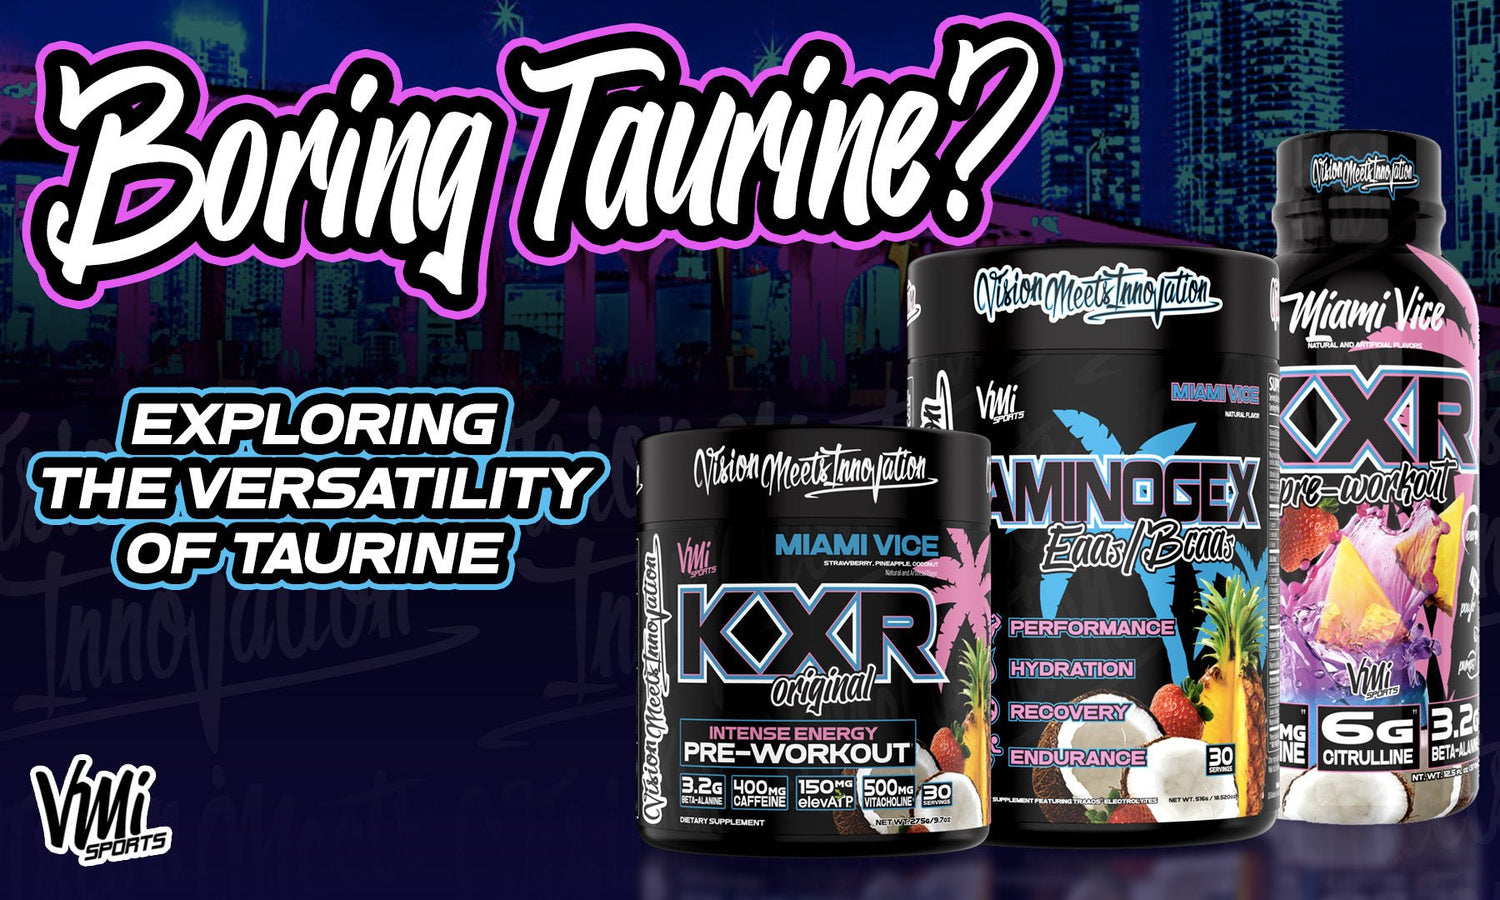 Boring Taurine? The versatility of Taurine!